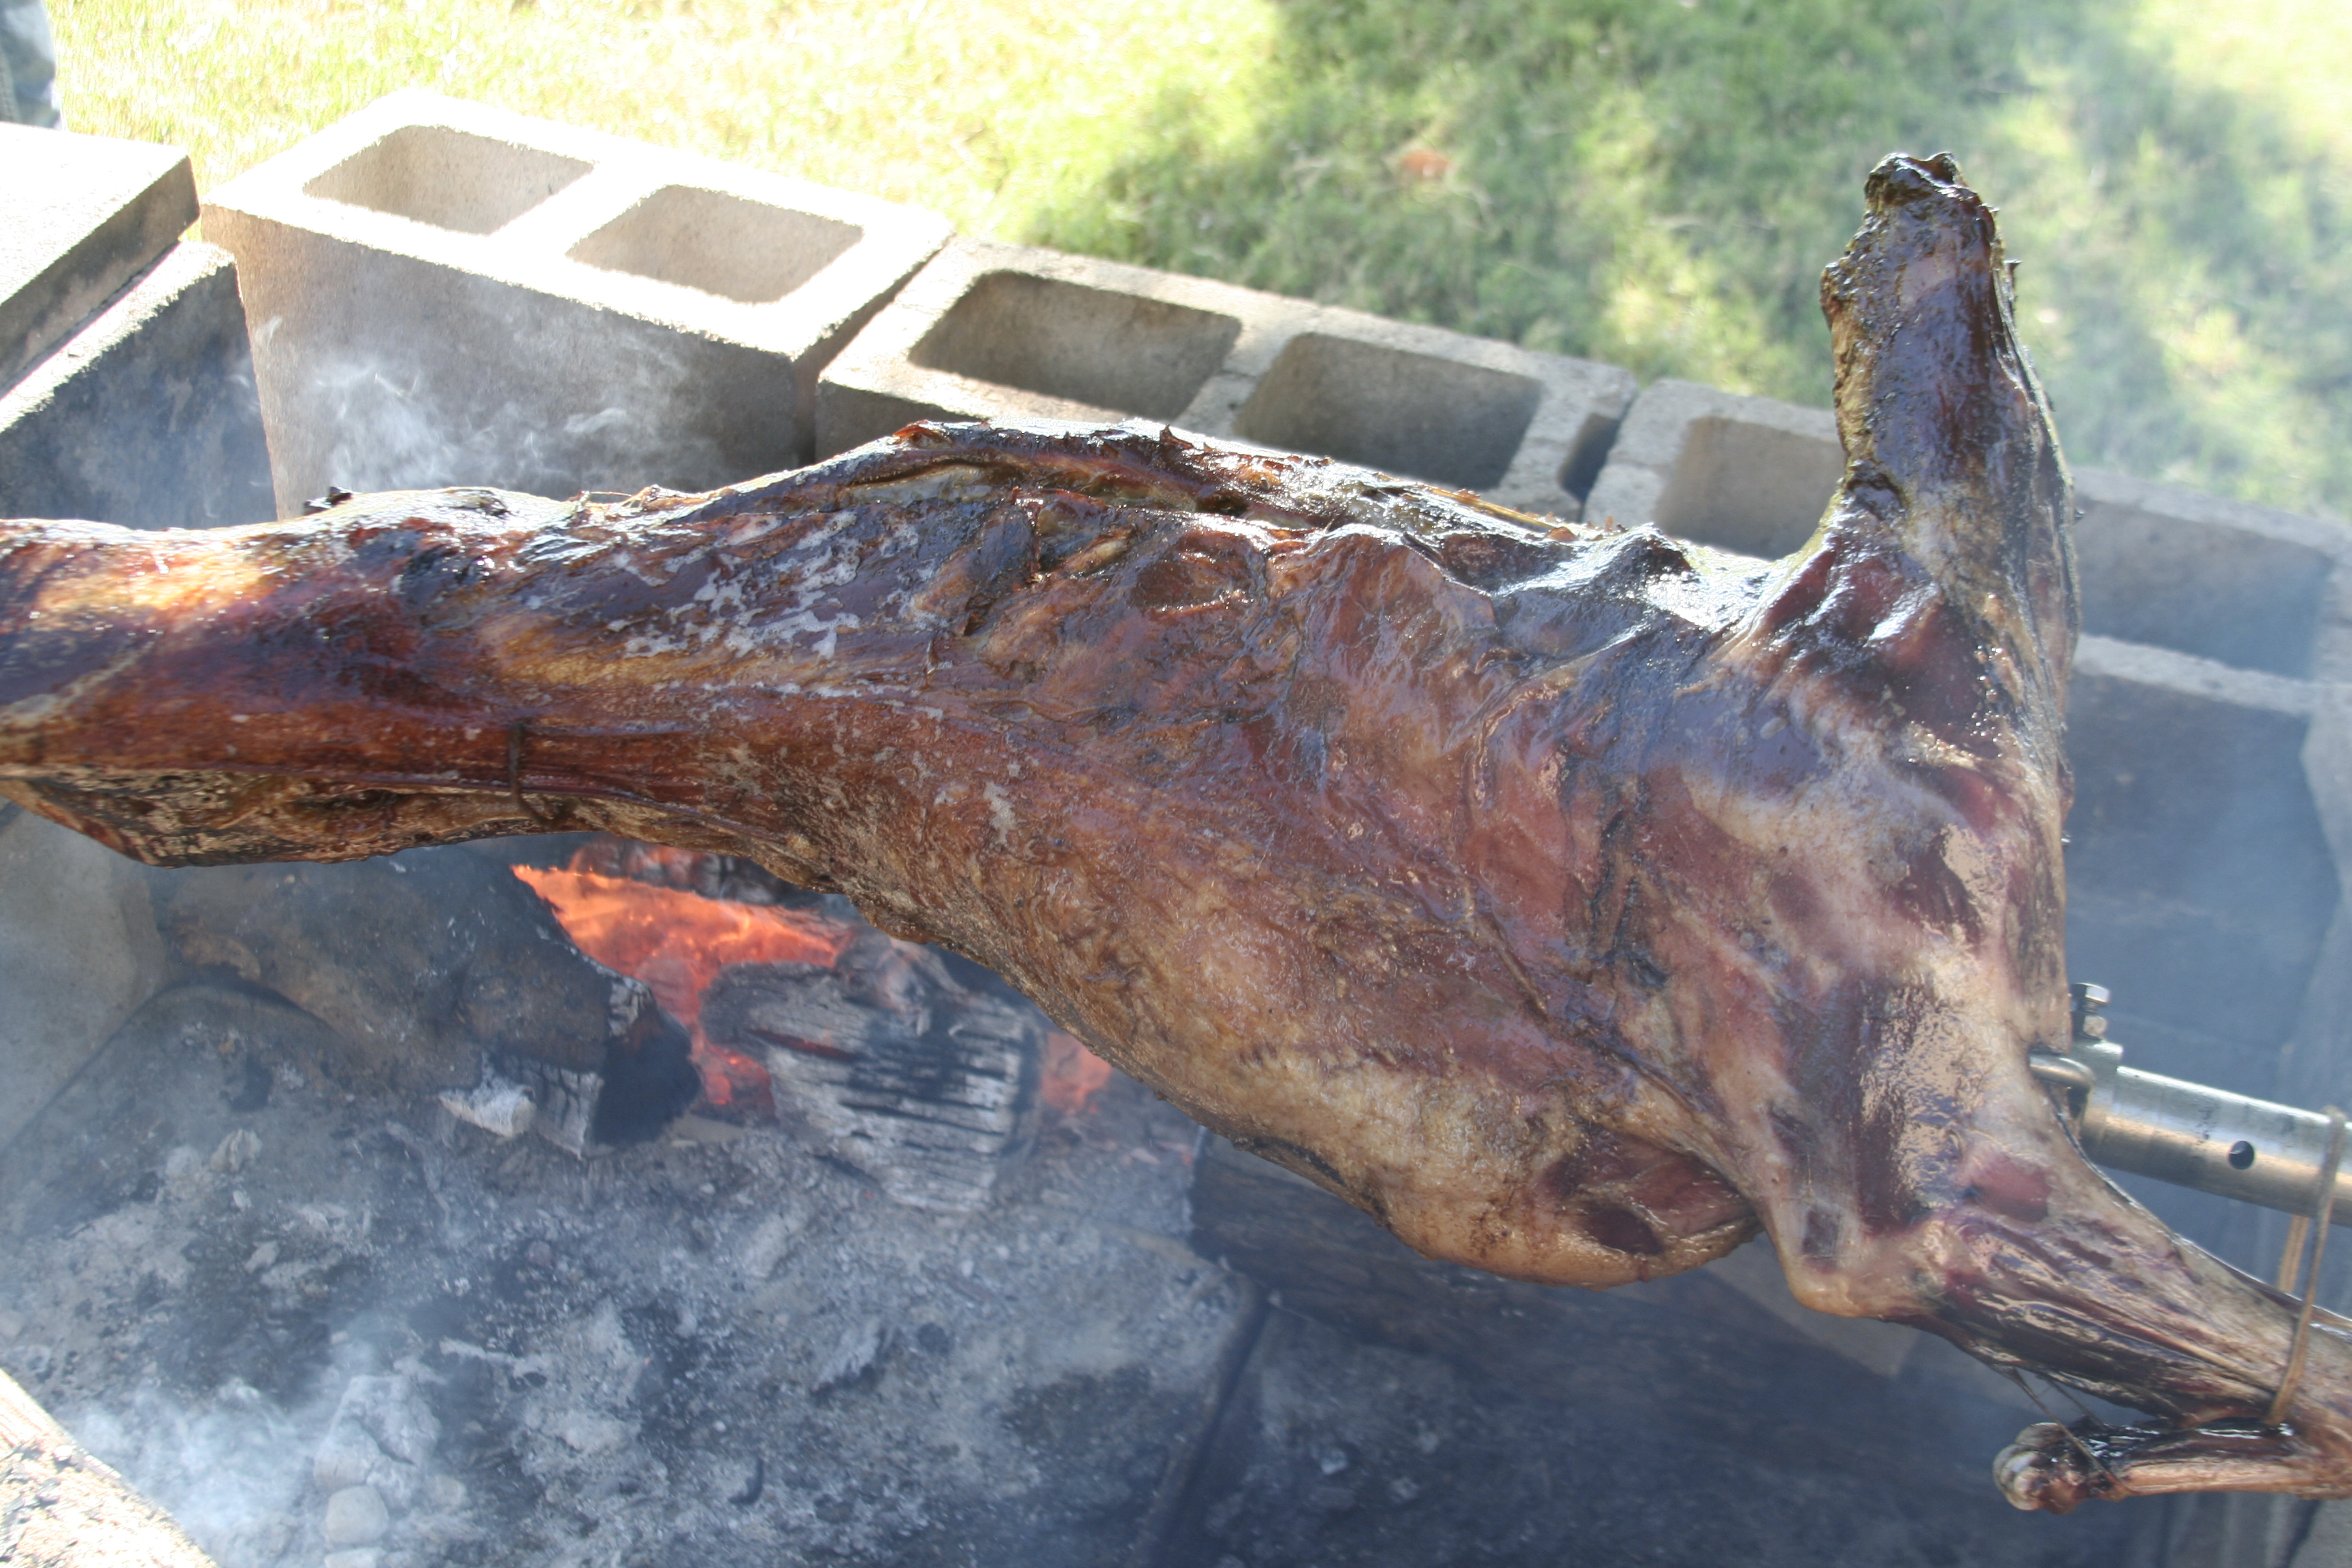 Goat roasting over oak fire